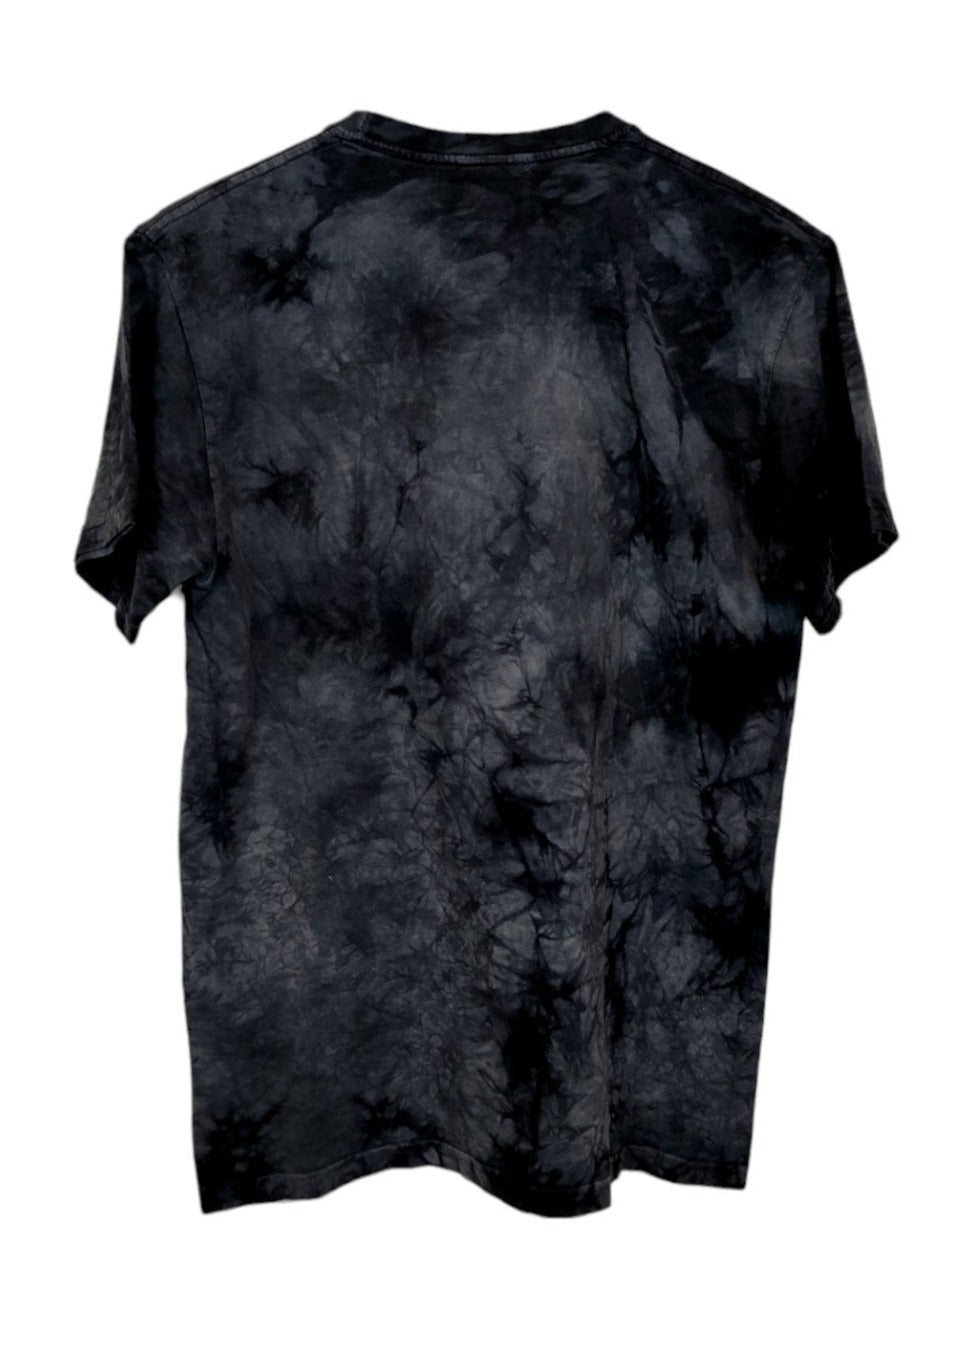 Vintage, Ανδρική Μπλούζα - T- Shirt HARLEQUIN σε Πετρόλ, Ξεθωριασμένο χρώμα (Small)